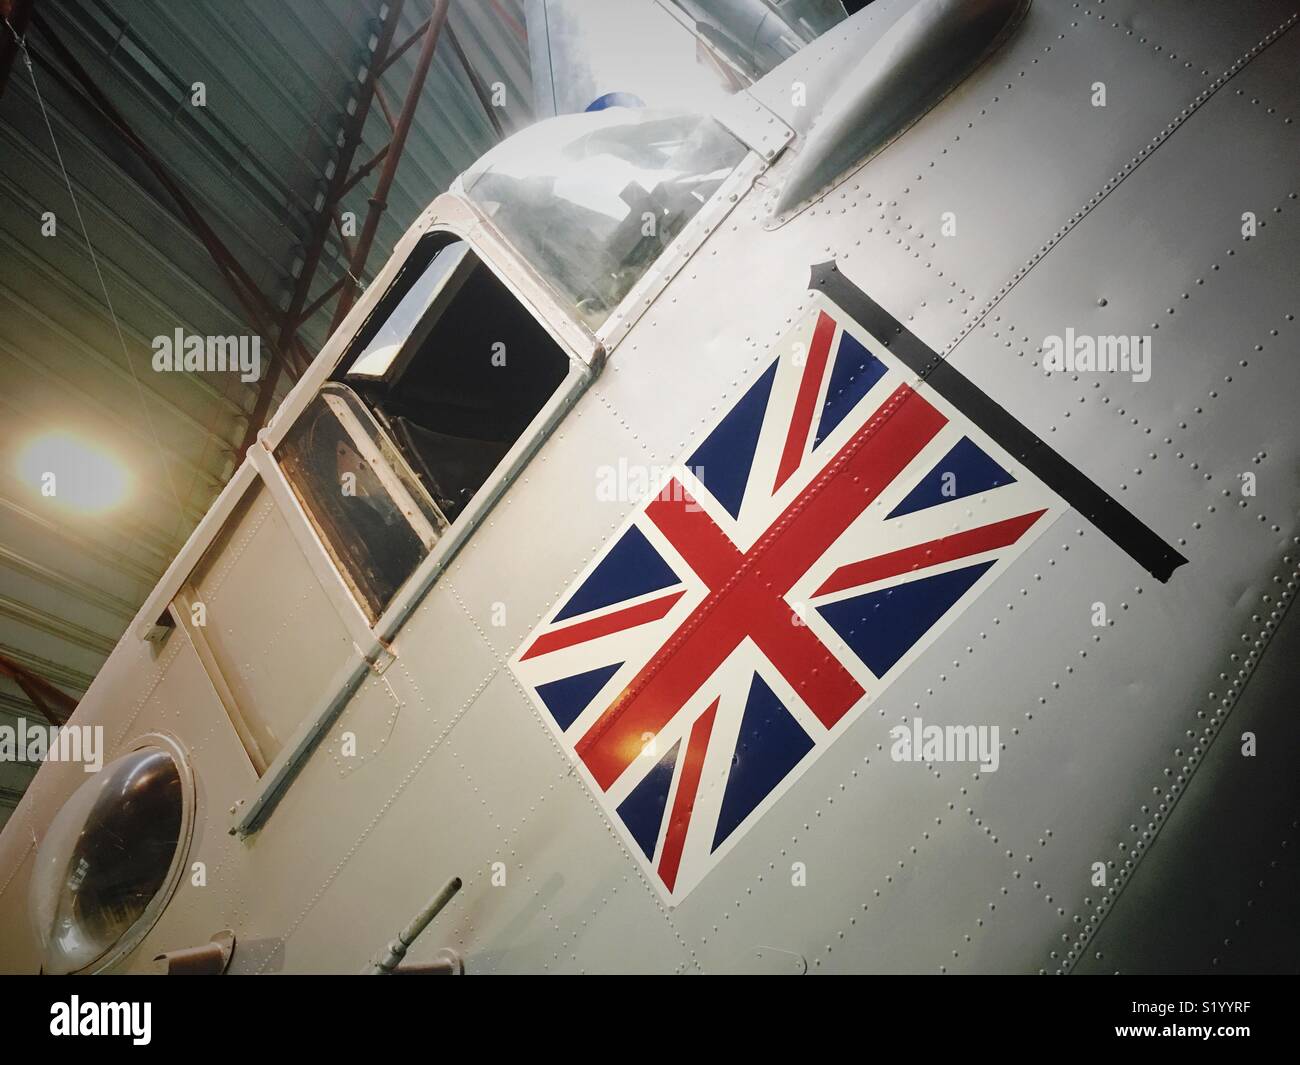 Avro York aircraft with Union Jack flag Stock Photo - Alamy